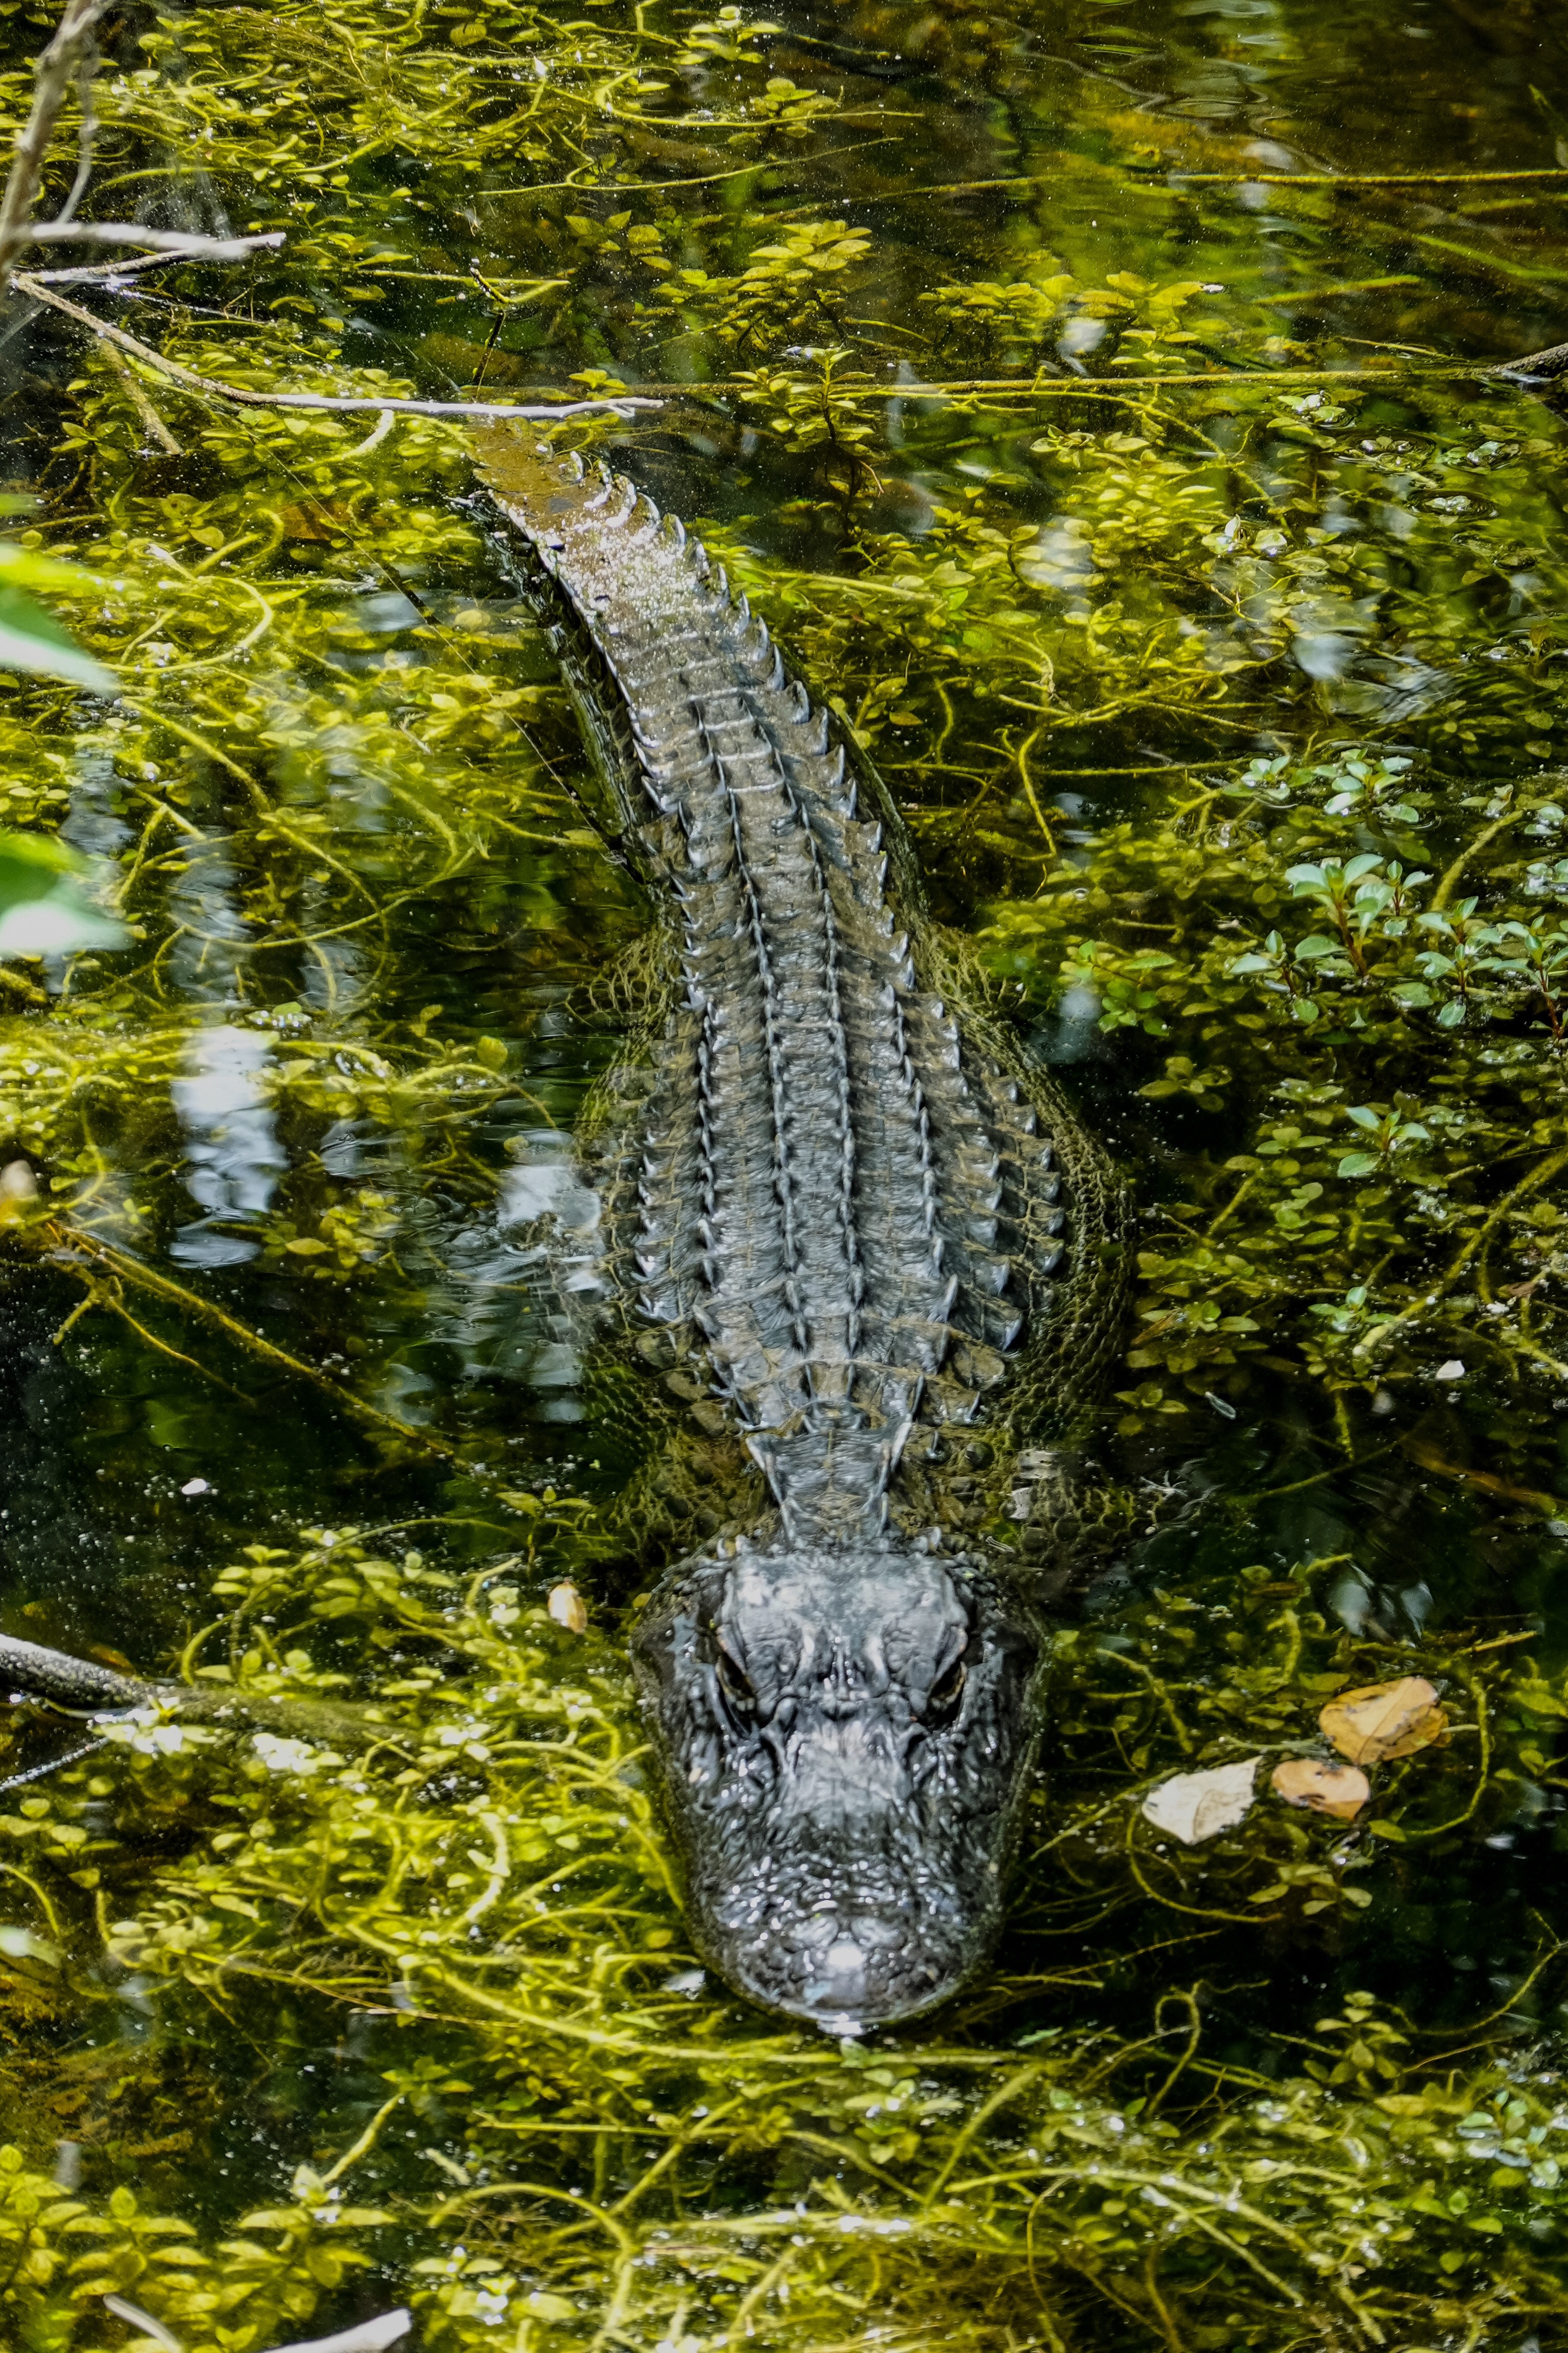 Alligator Wallpaper